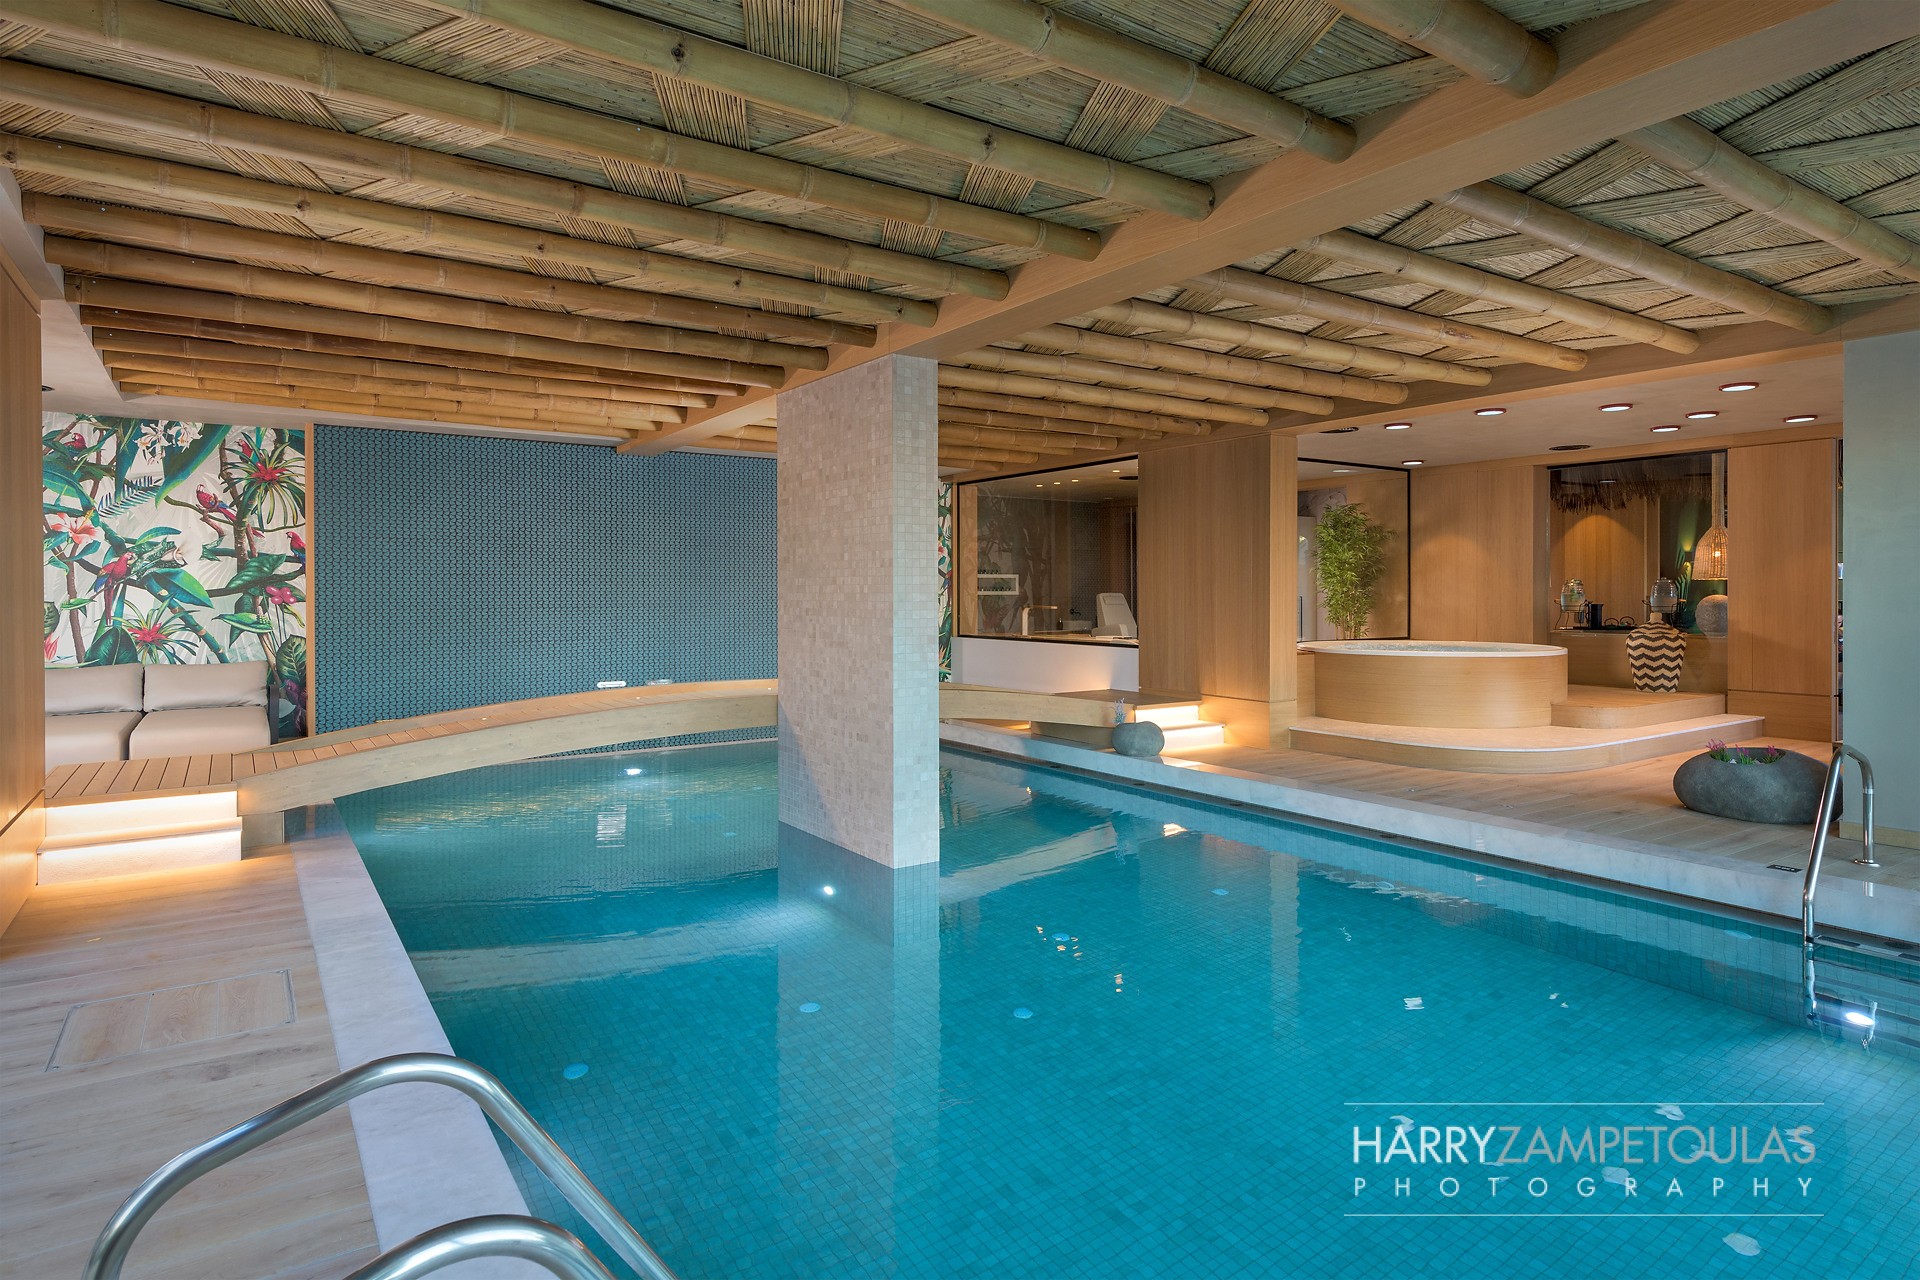 SPA-Pool-Night-1 Porto Angeli Resort Hotel - Hotel Photography Harry Zampetoulas 